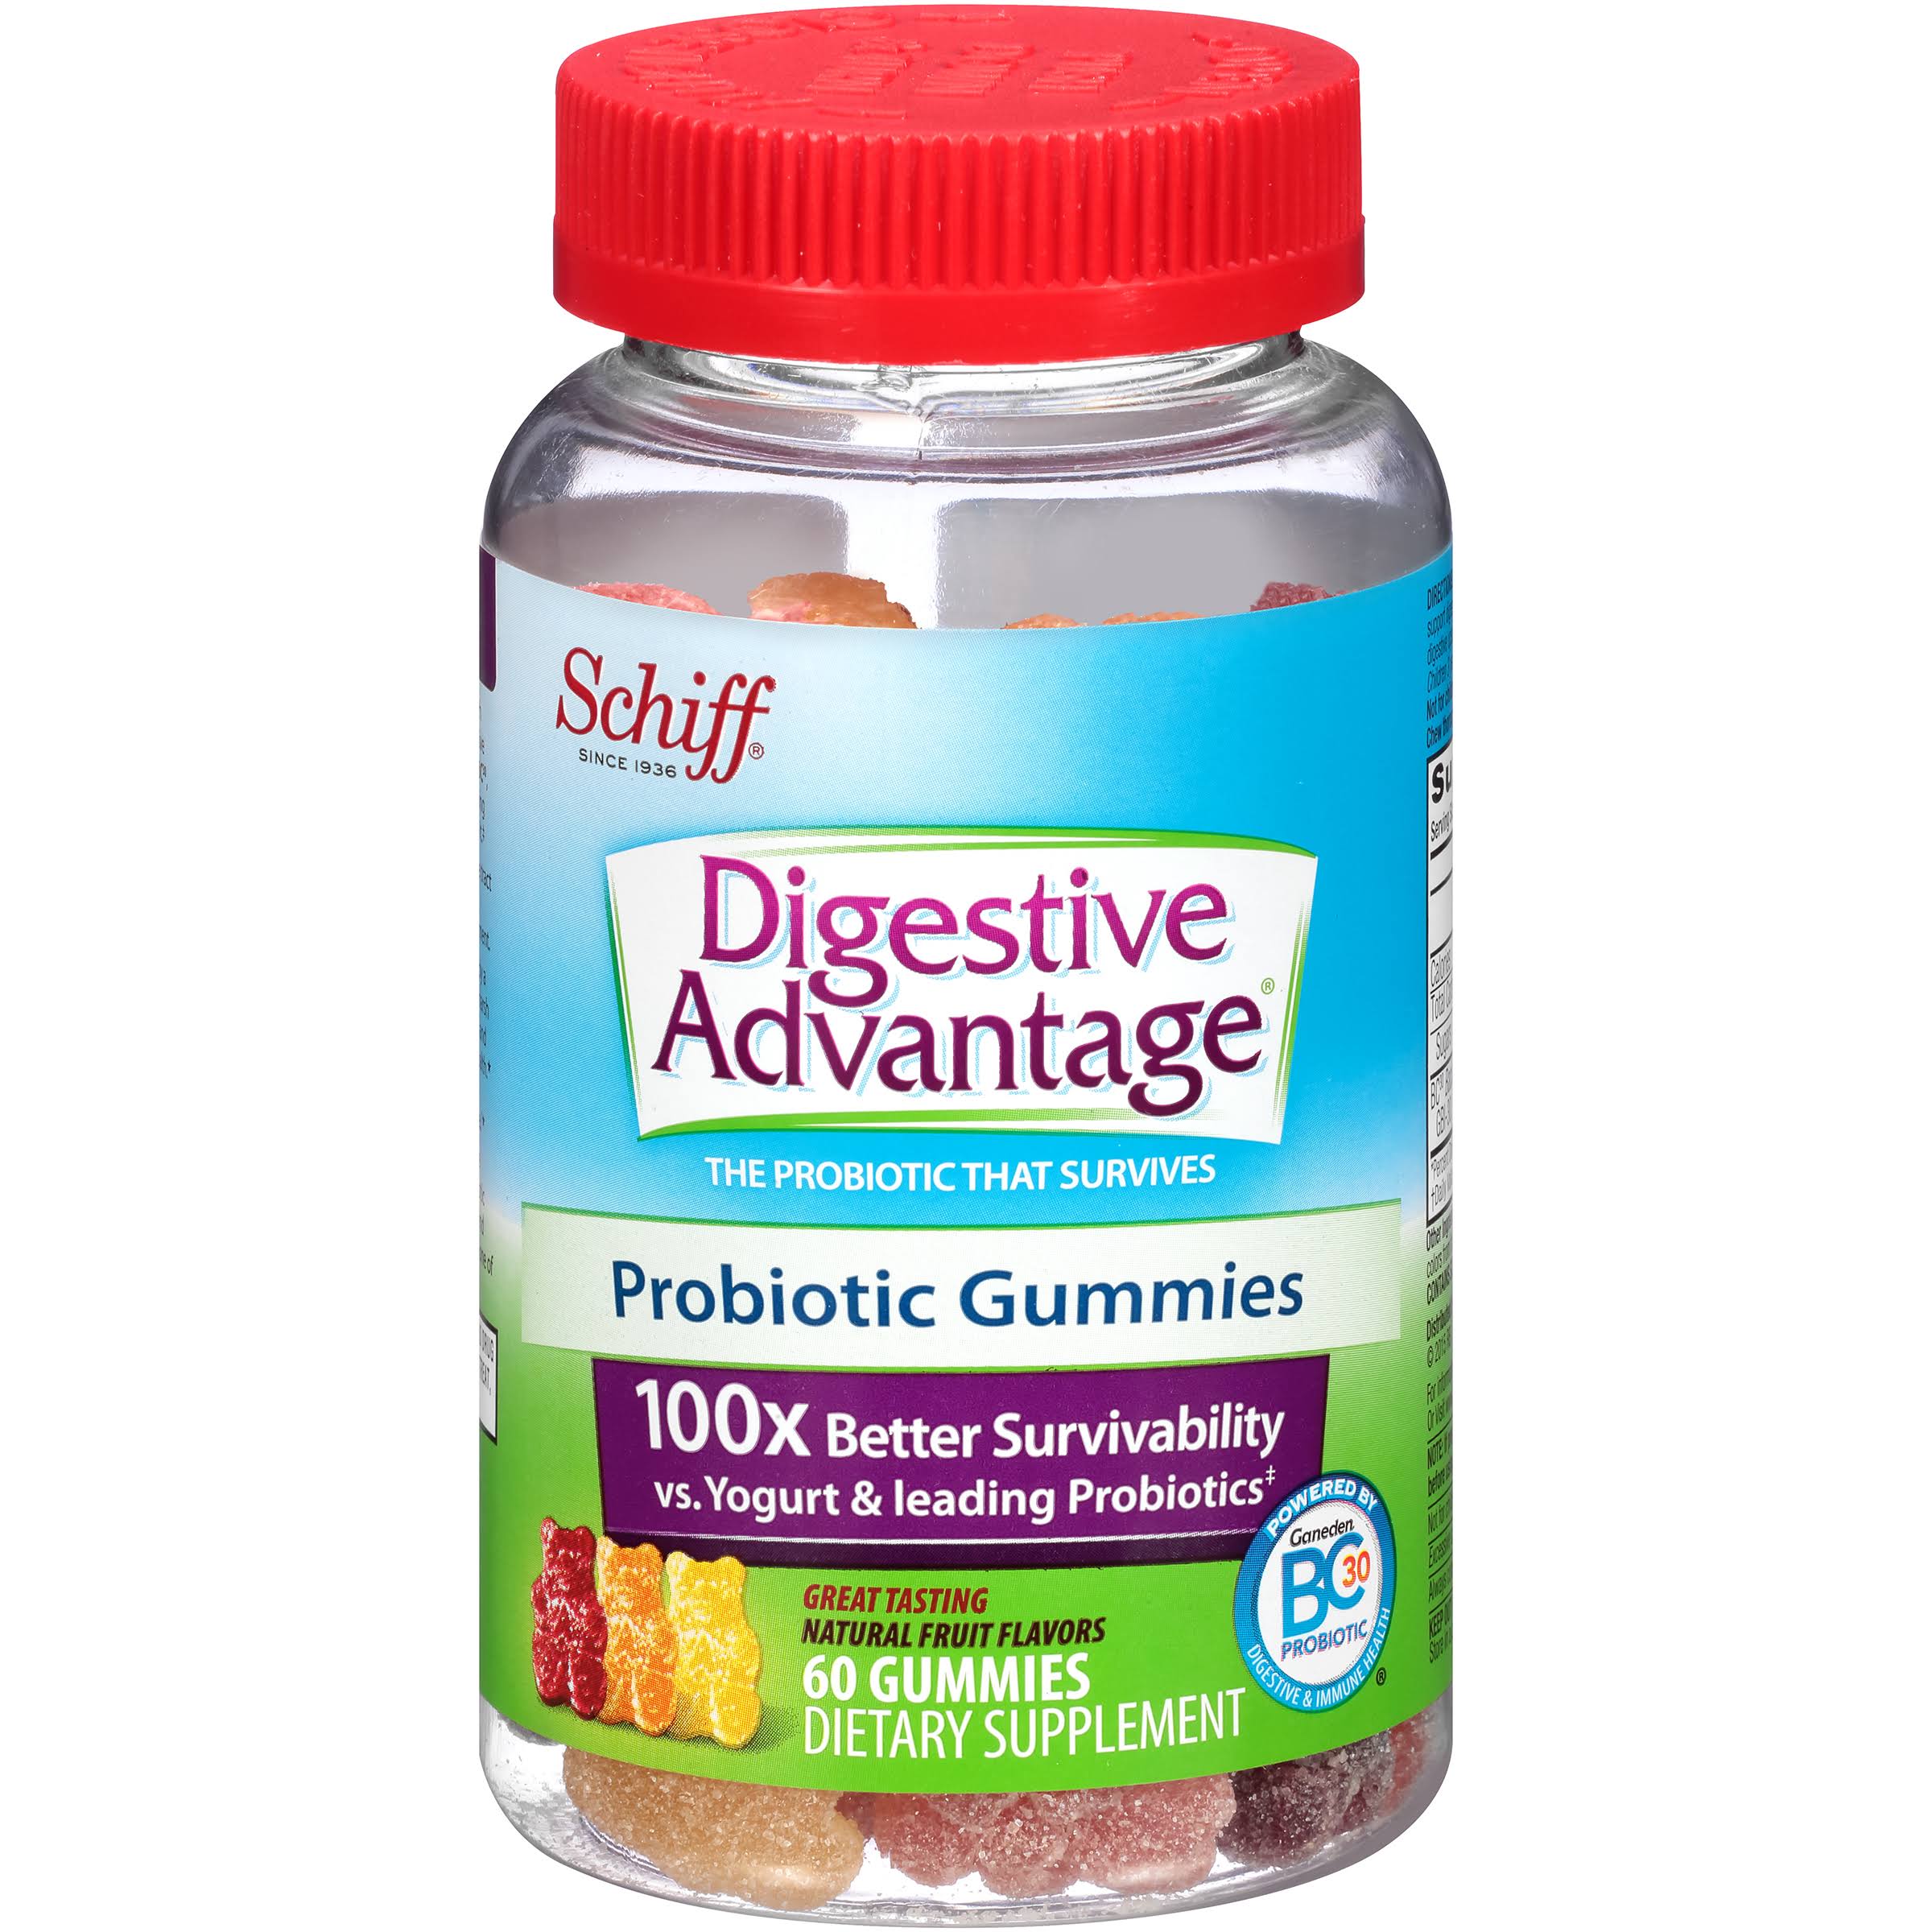 Schiff Digestive Advantage Probiotic Gummies - x60